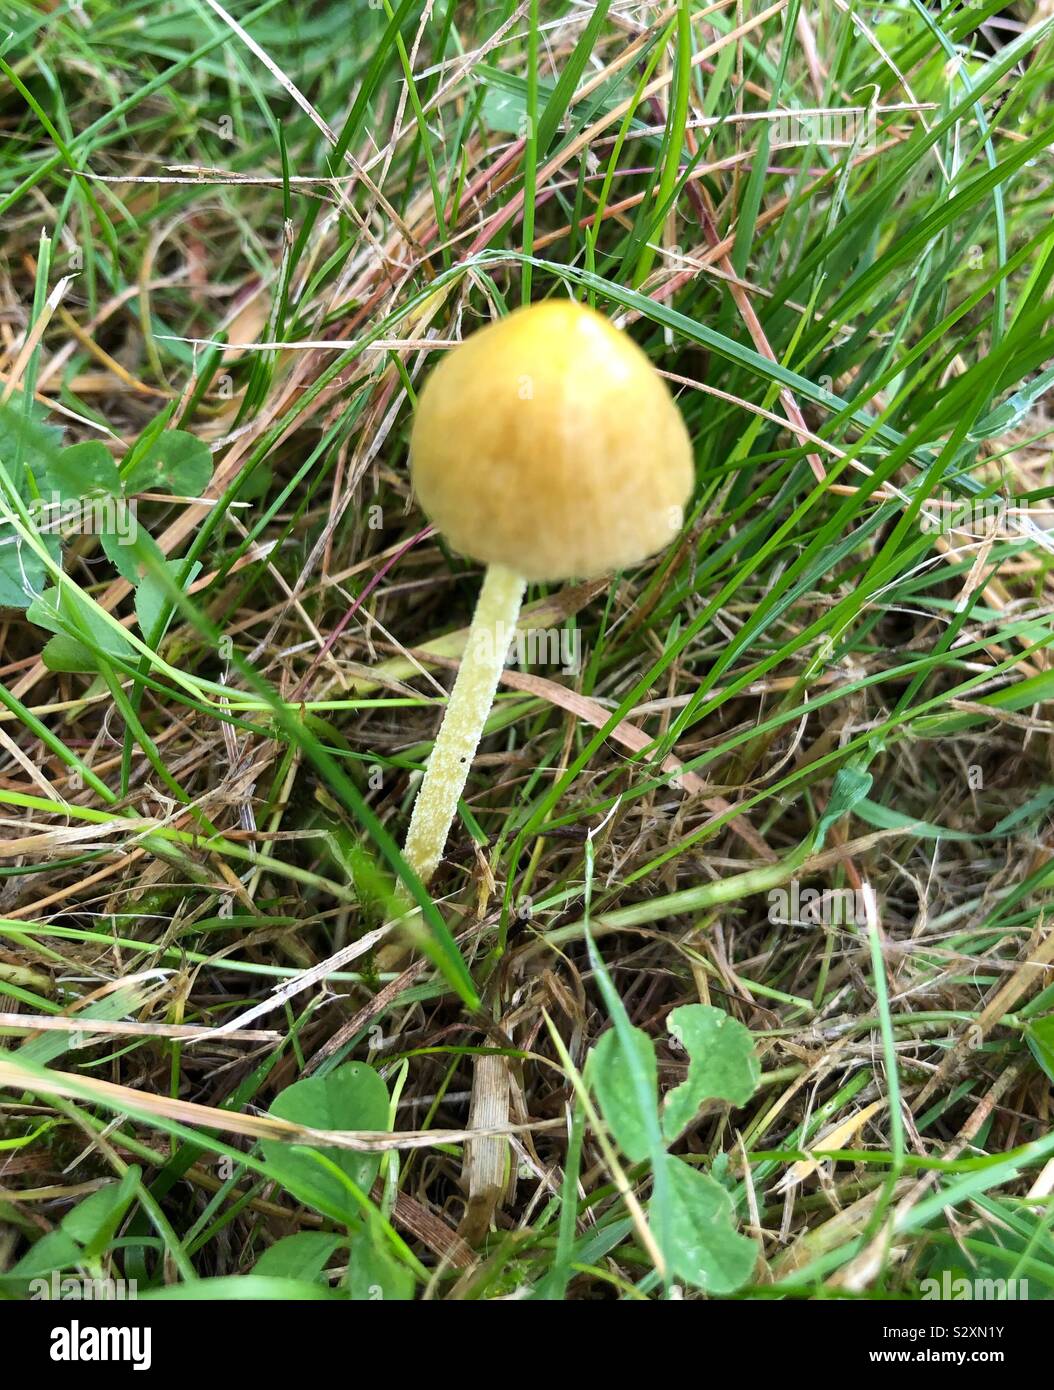 Yellow field cap mushroom Stock Photo